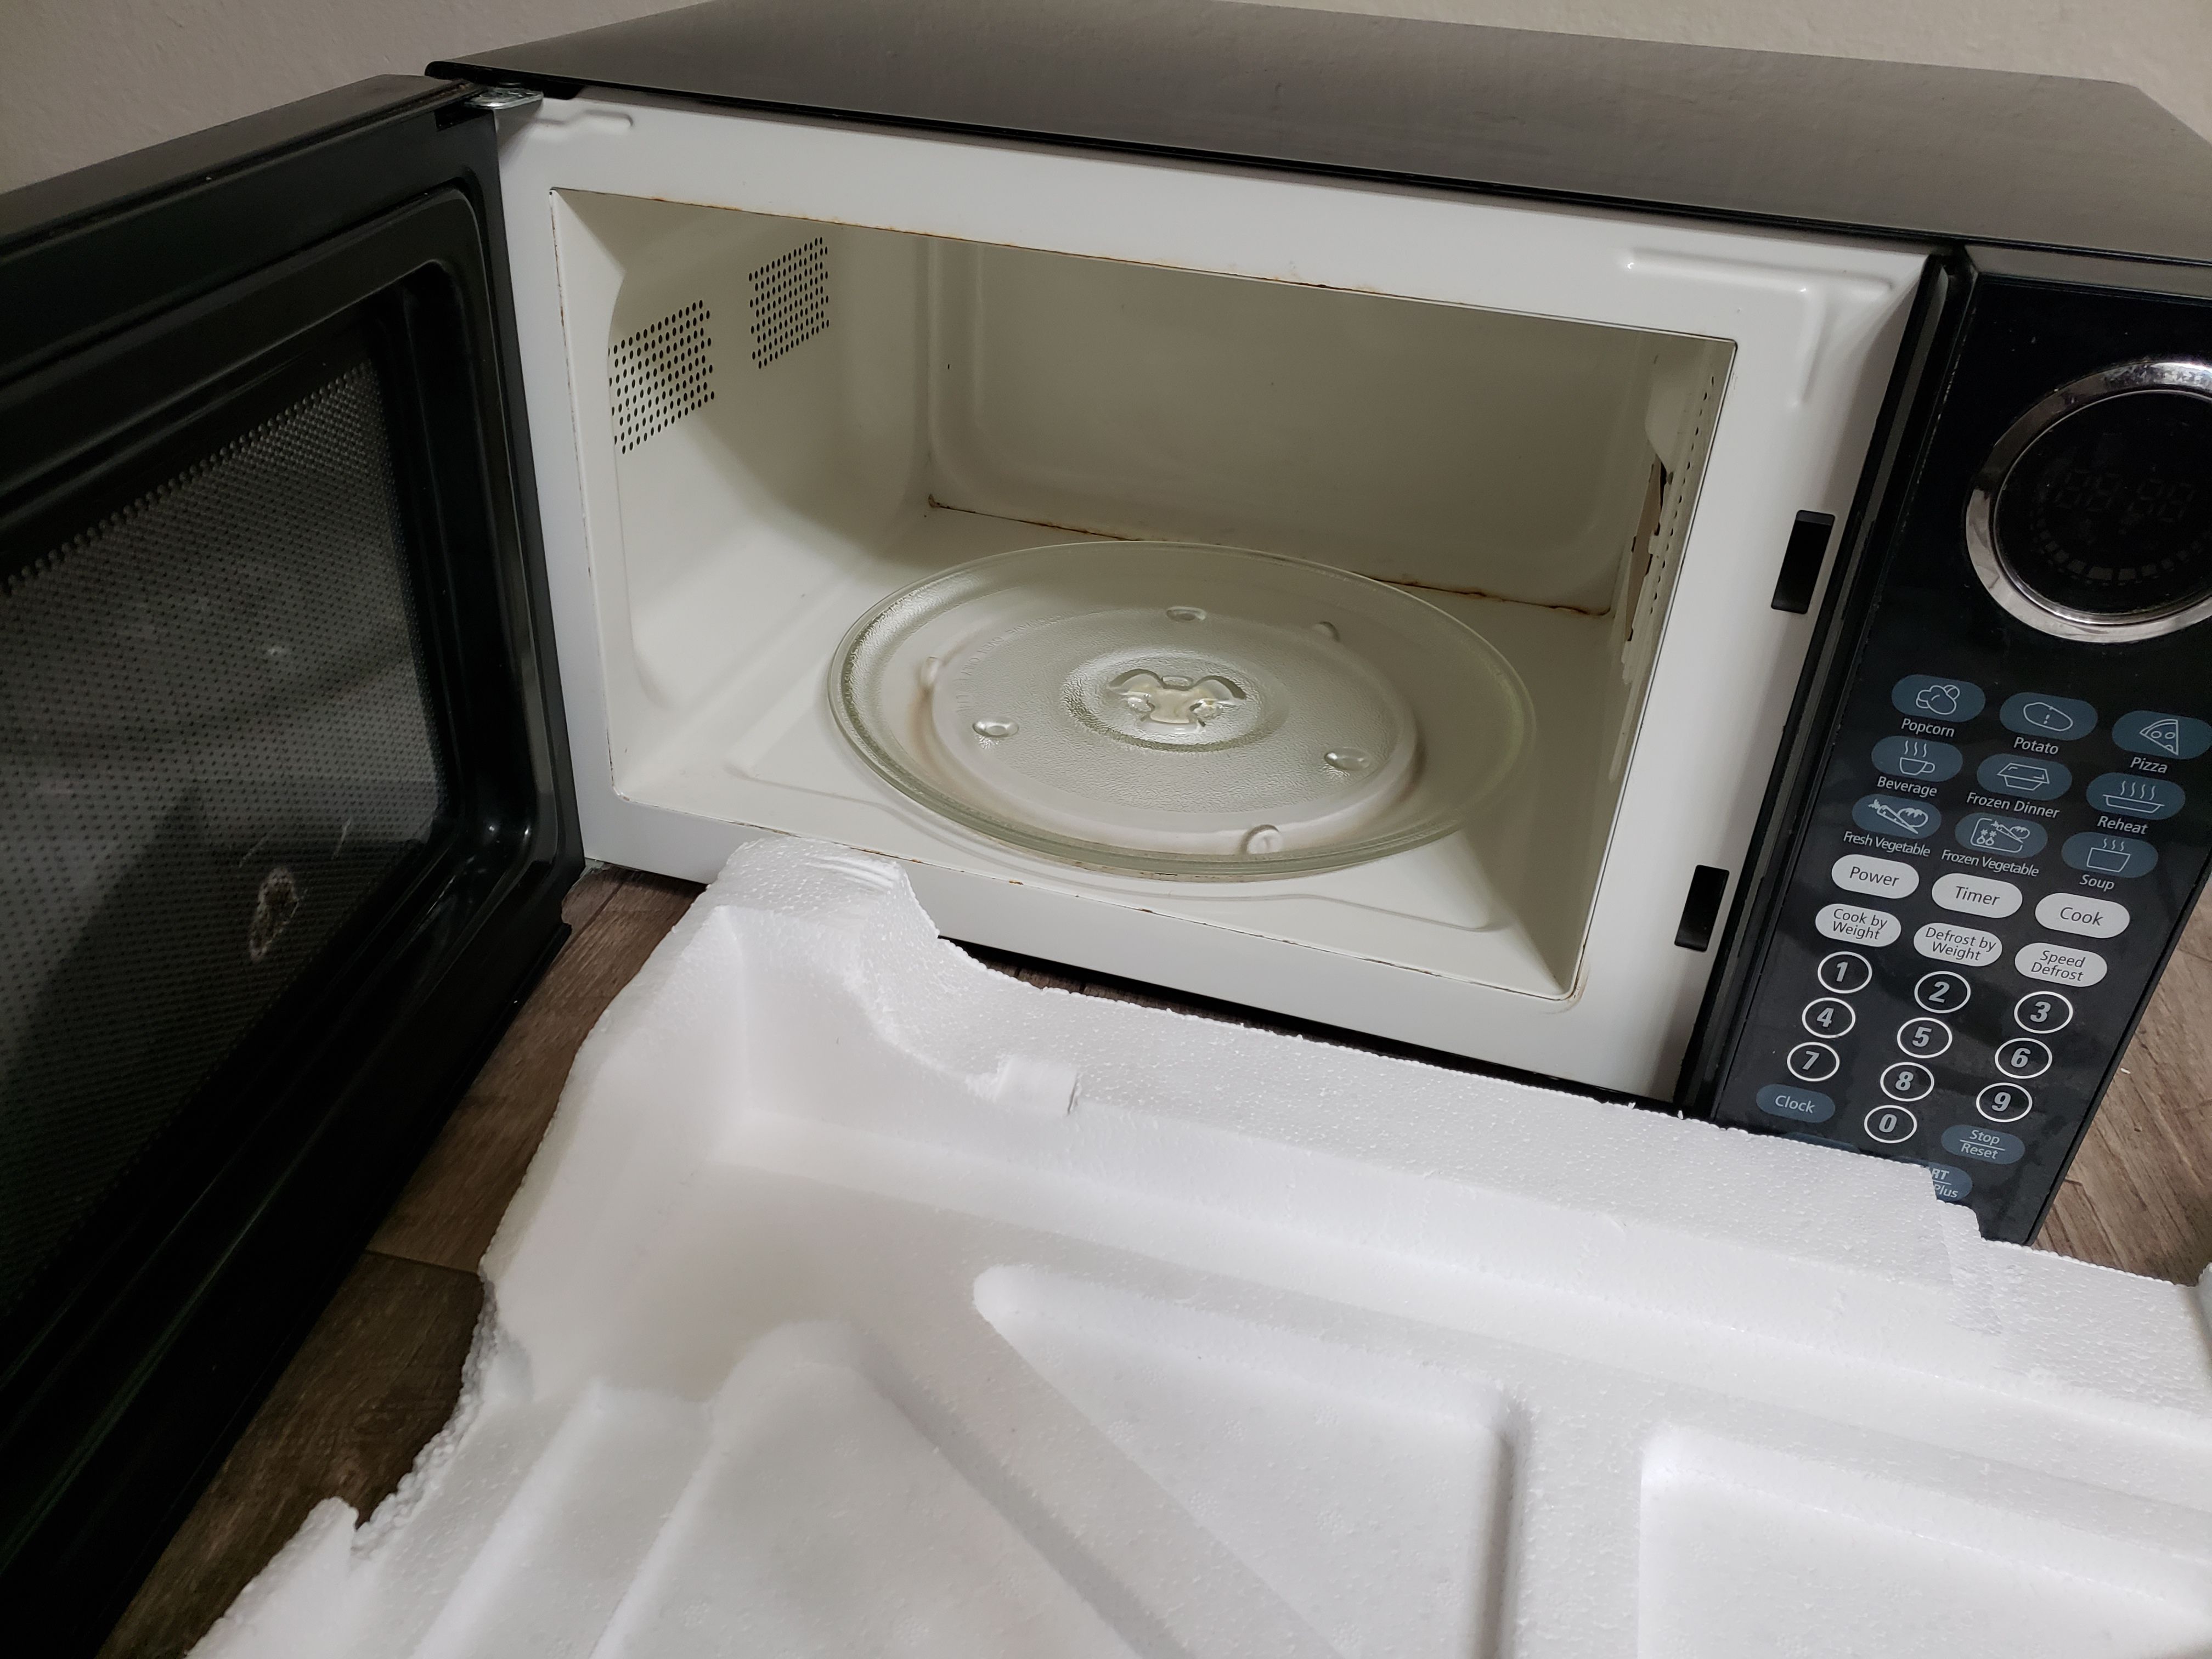 Sunbeam Microwave for Sale in Vista, CA - OfferUp